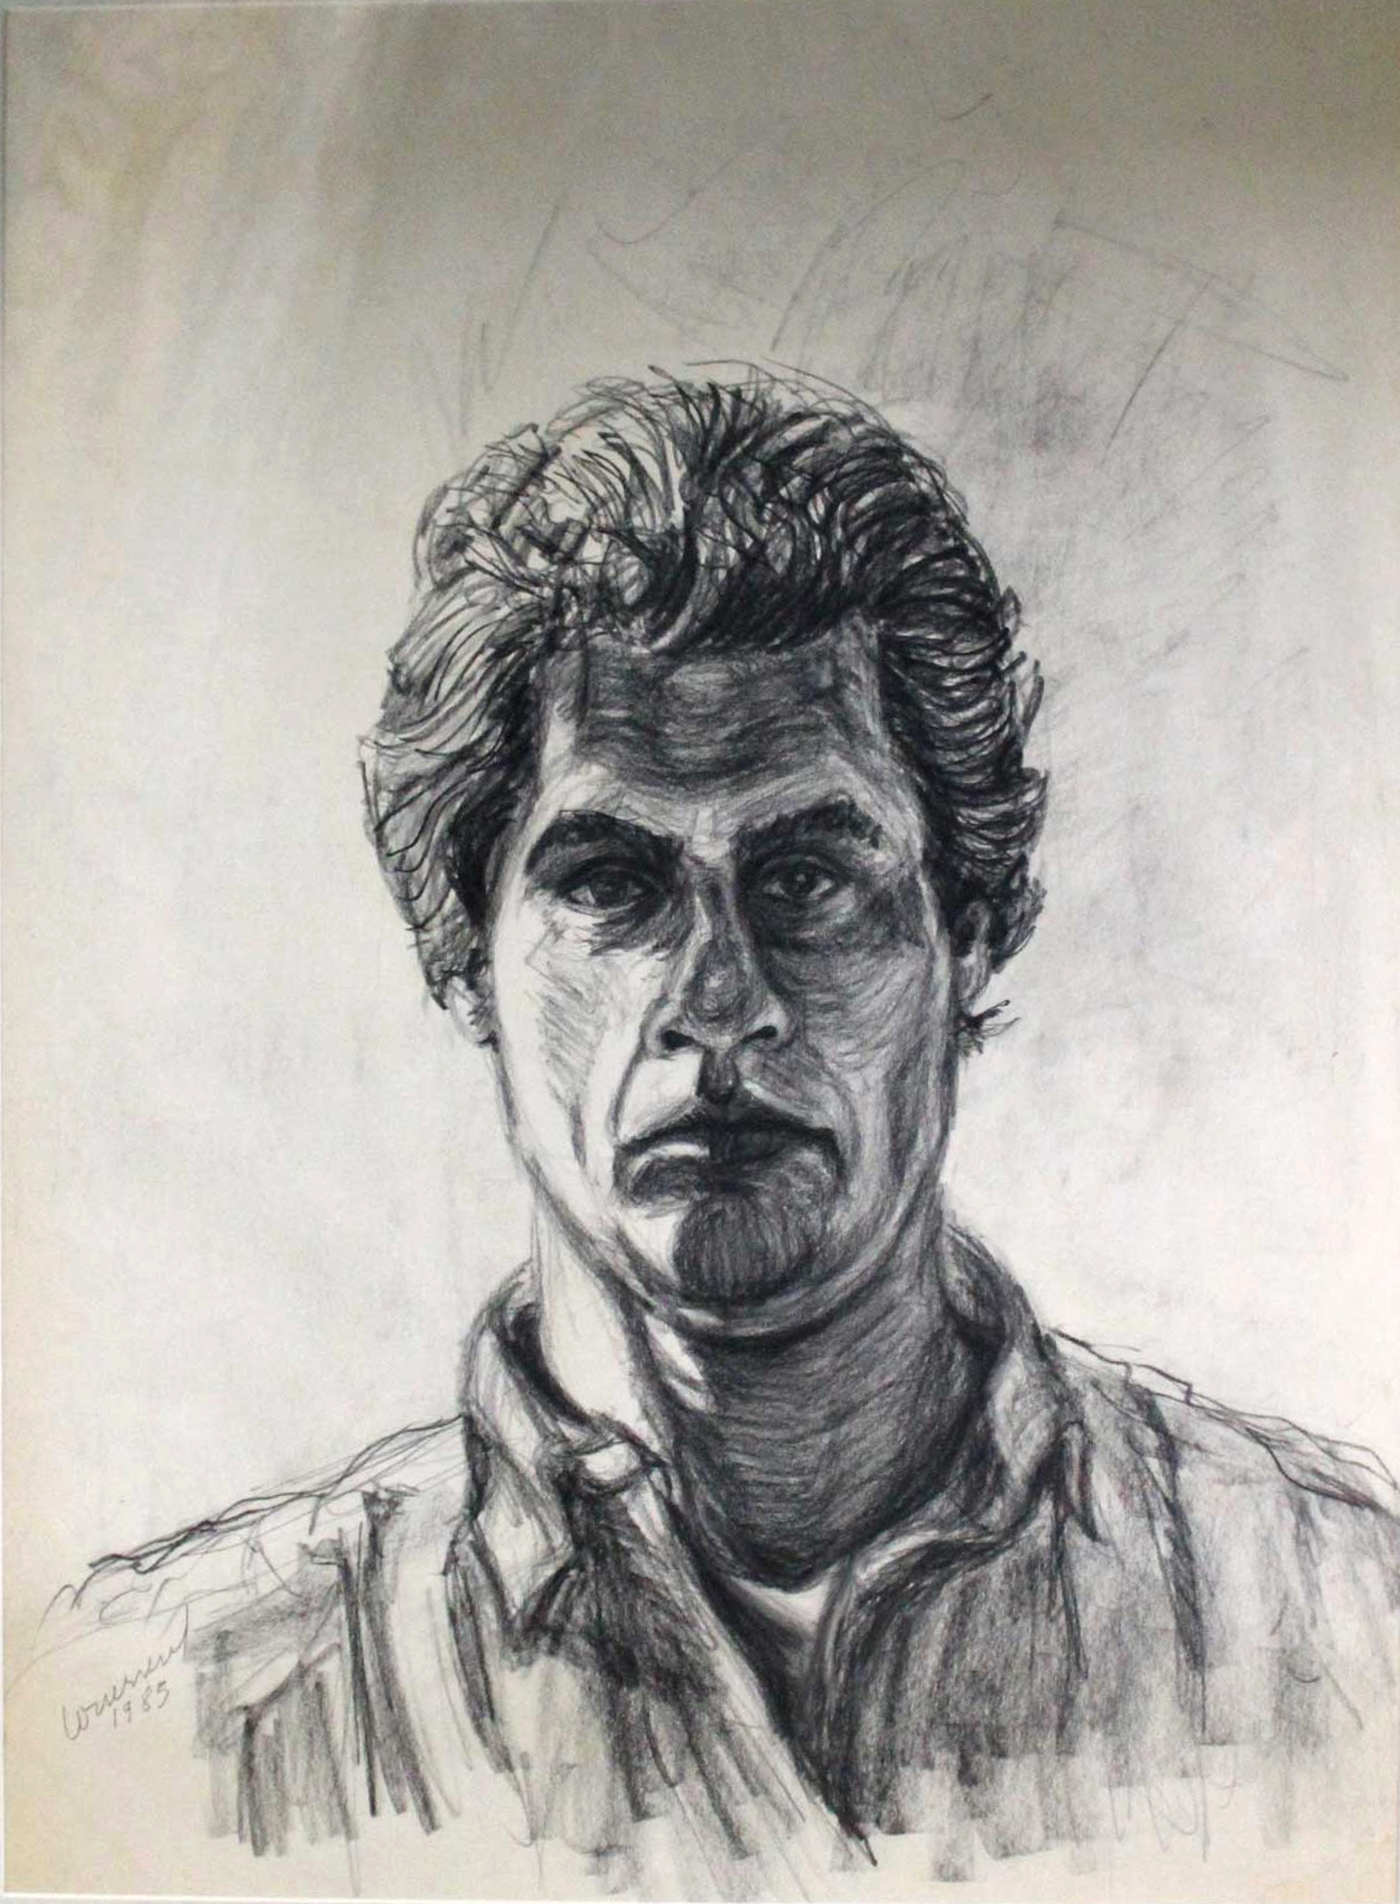 img-galeria-quote- Obra titulada “Walter Herrera Amighetti (autorretrato)”, técnica utilizada crayón, dimensiones: 90 x 61 cms, año 1983.